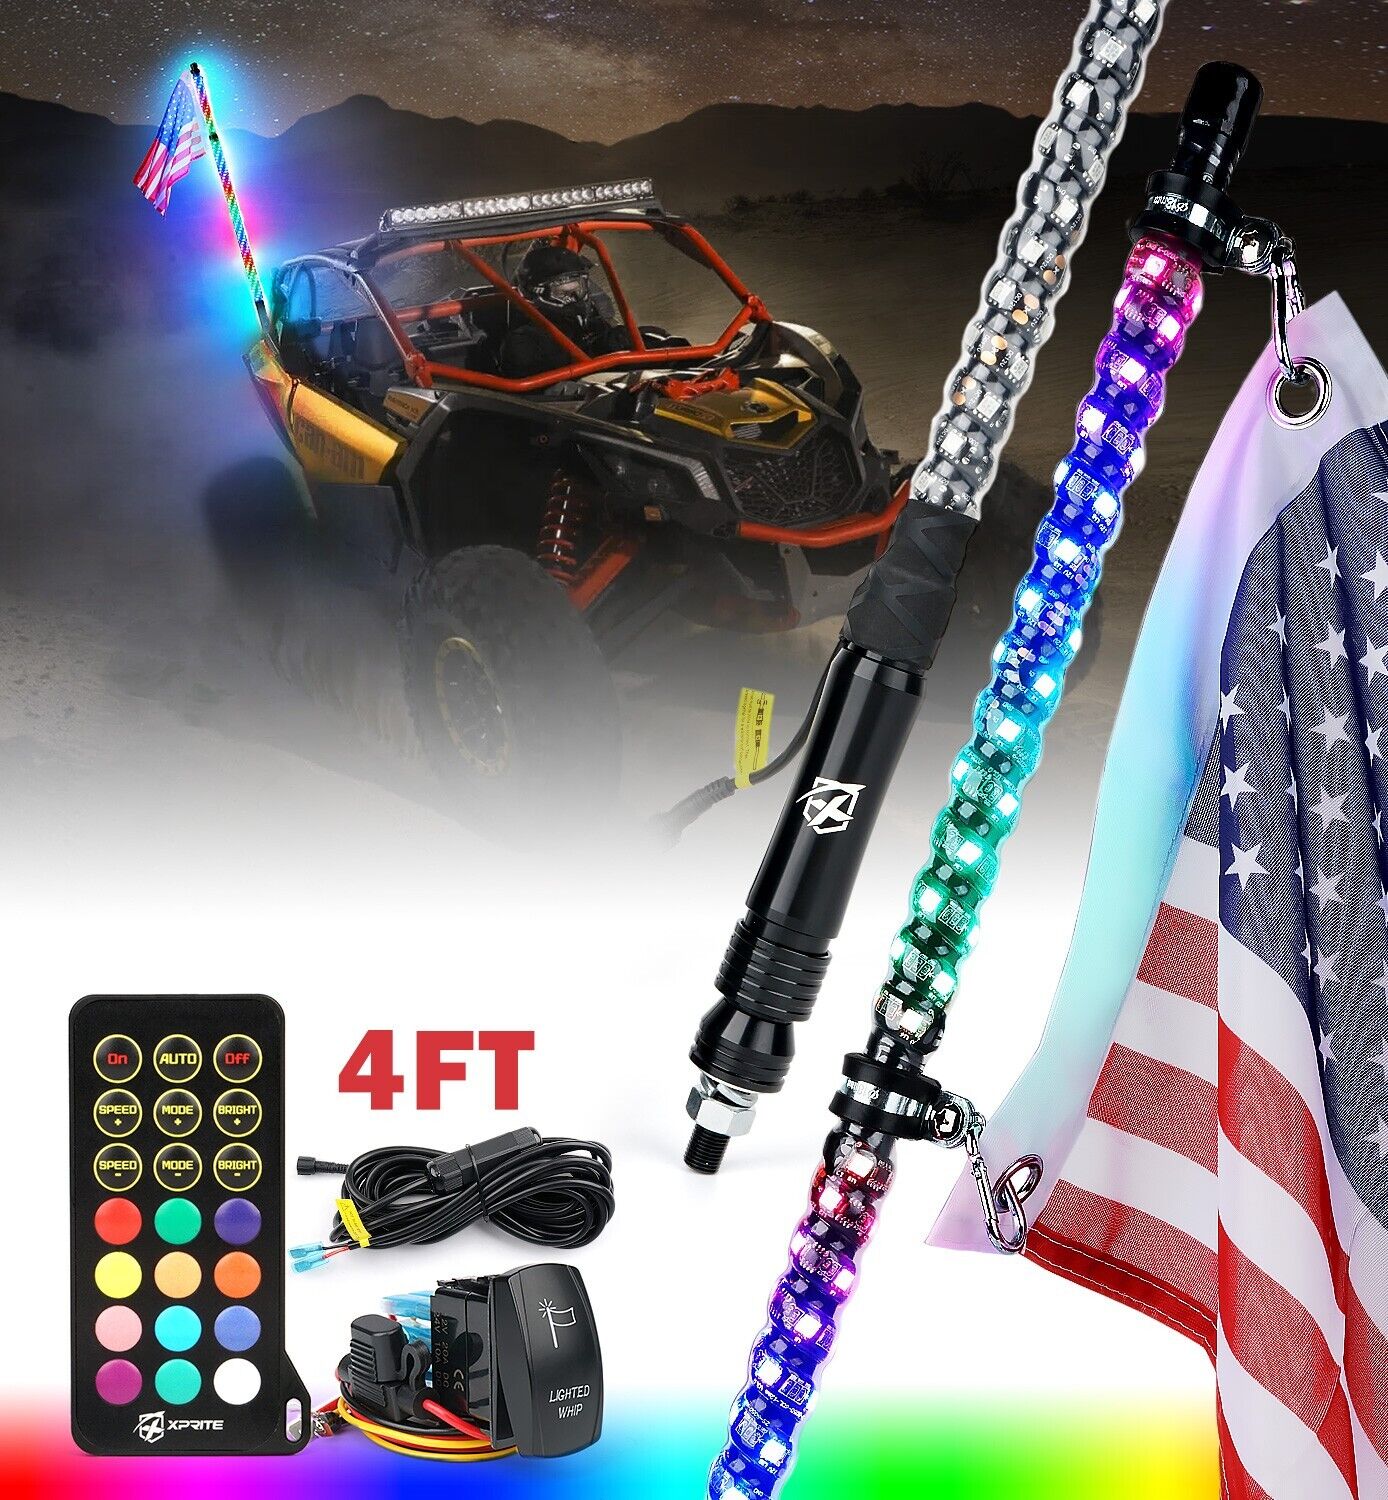 XPRITE 4ft RGB LED Spiral Whip Lights Dancing Remote for UTV RZR ATV 4WD 4x4 SXS